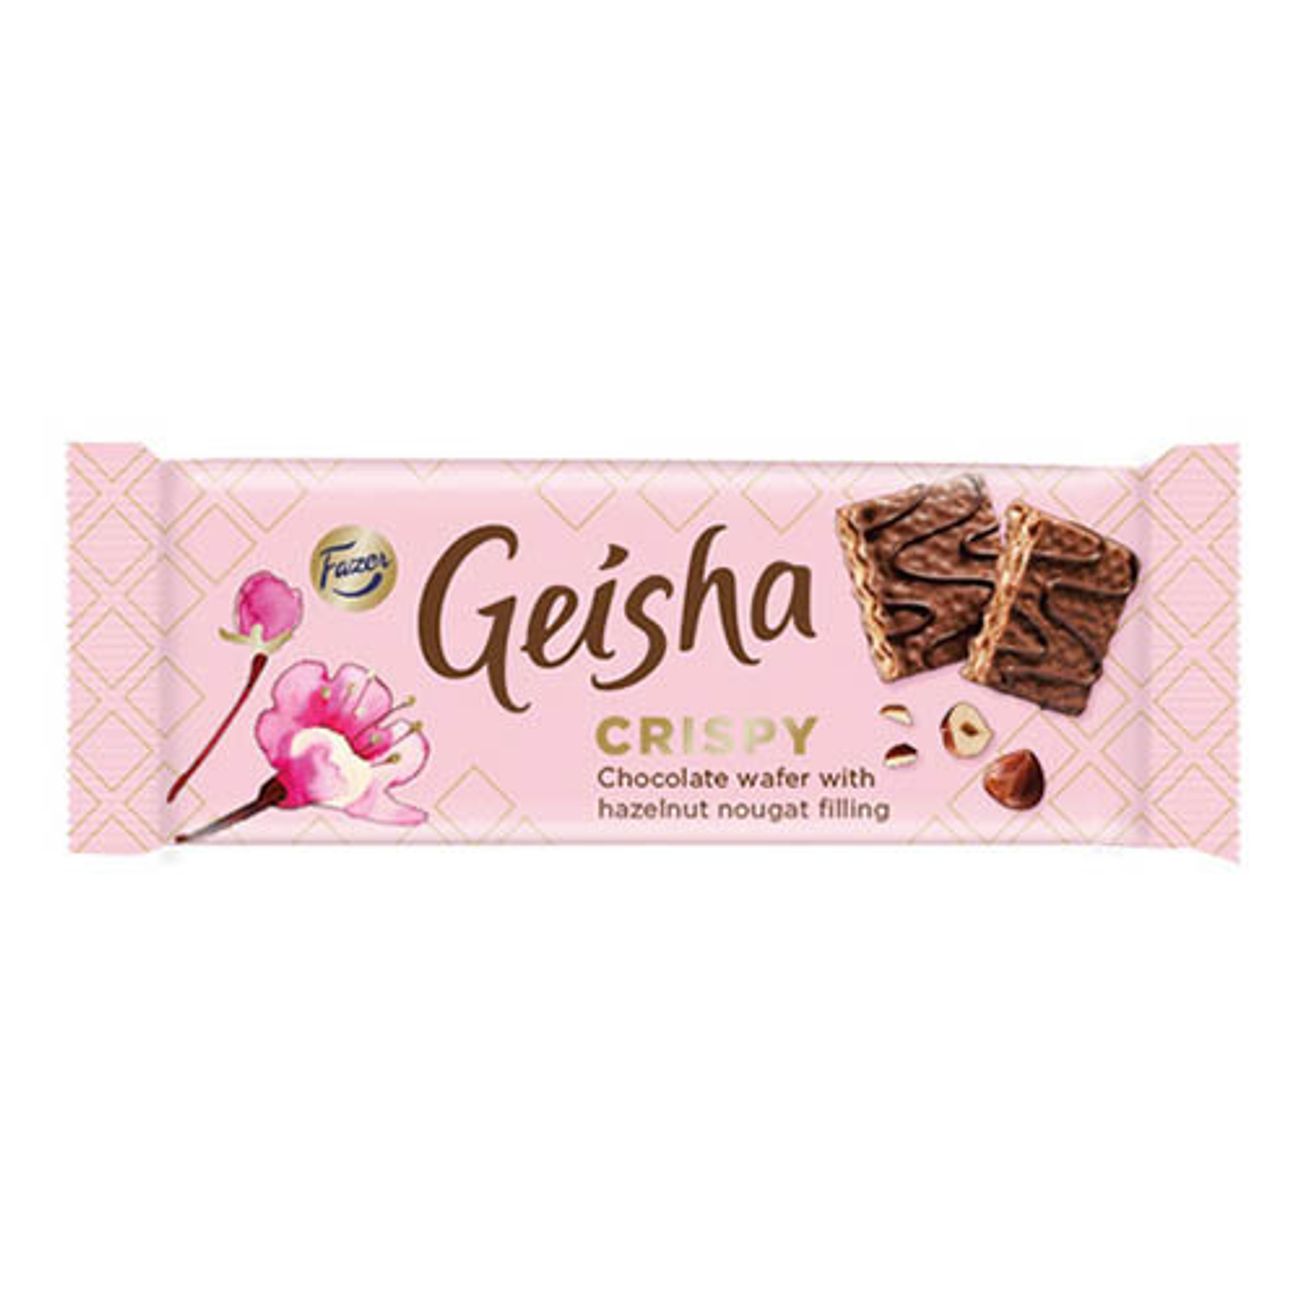 geisha-crispy-stycksak-41-gr-1